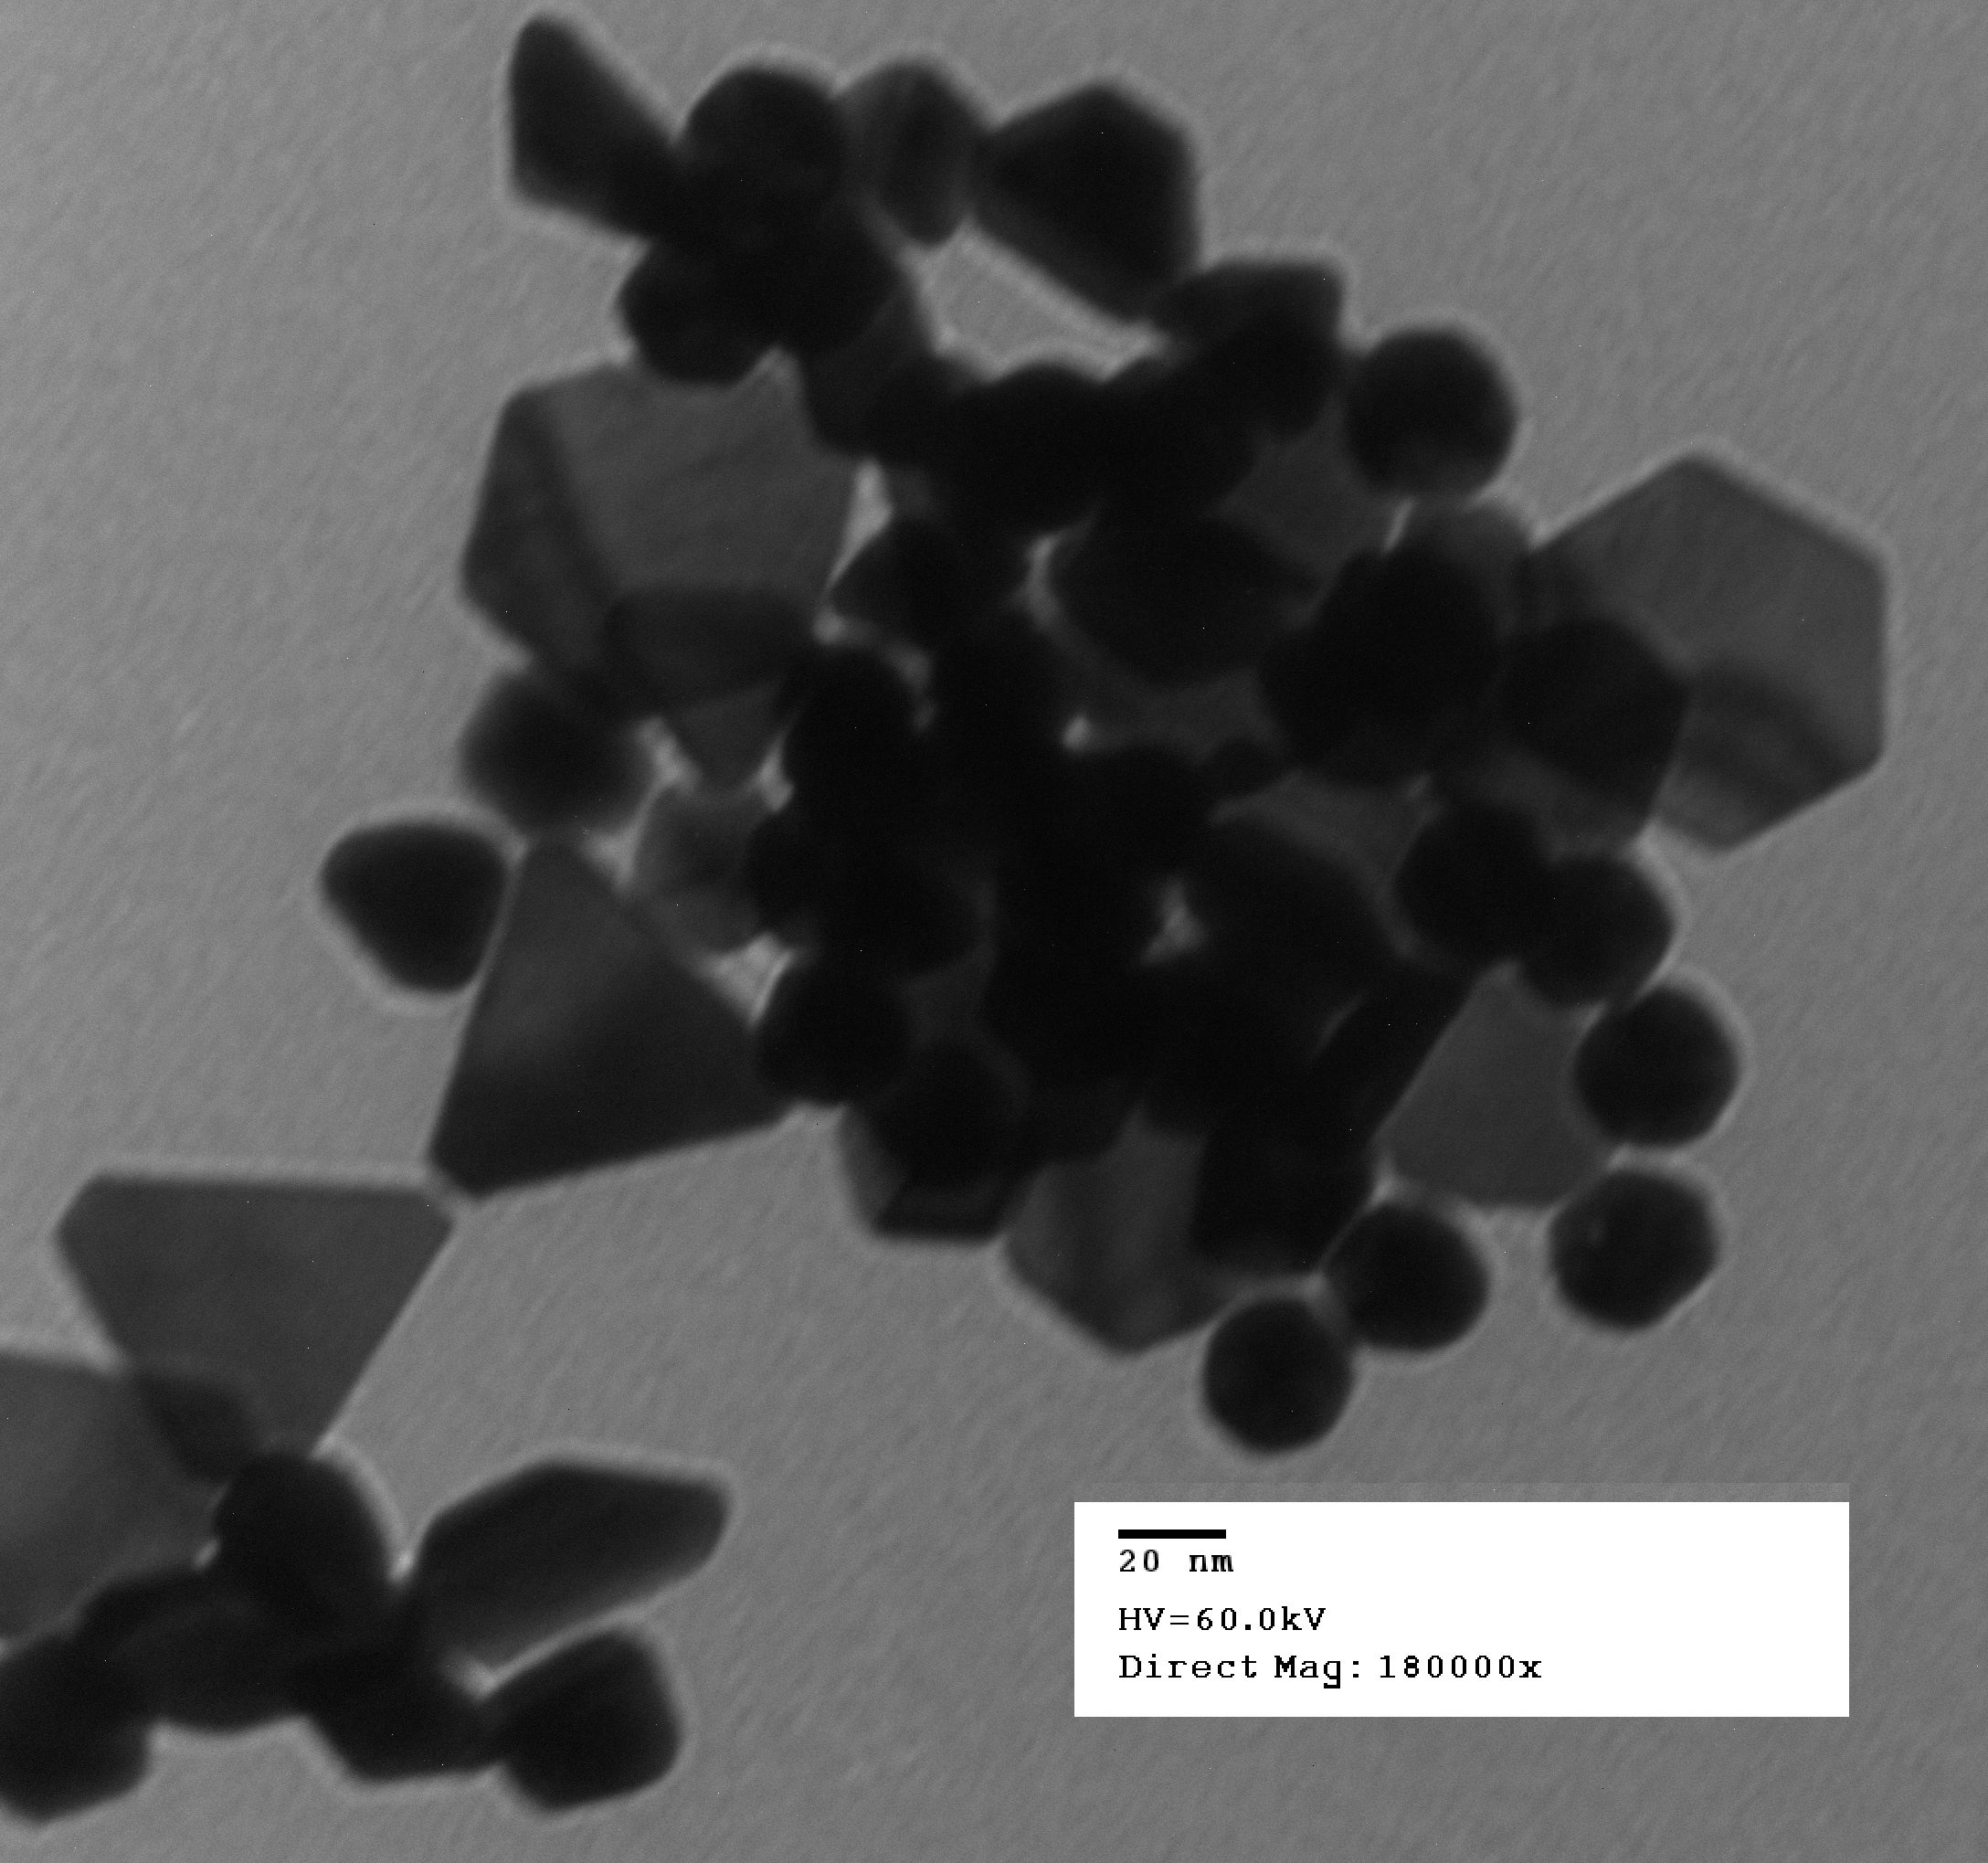 cucurmin loaded gold nanoparticles at 20 nm scale